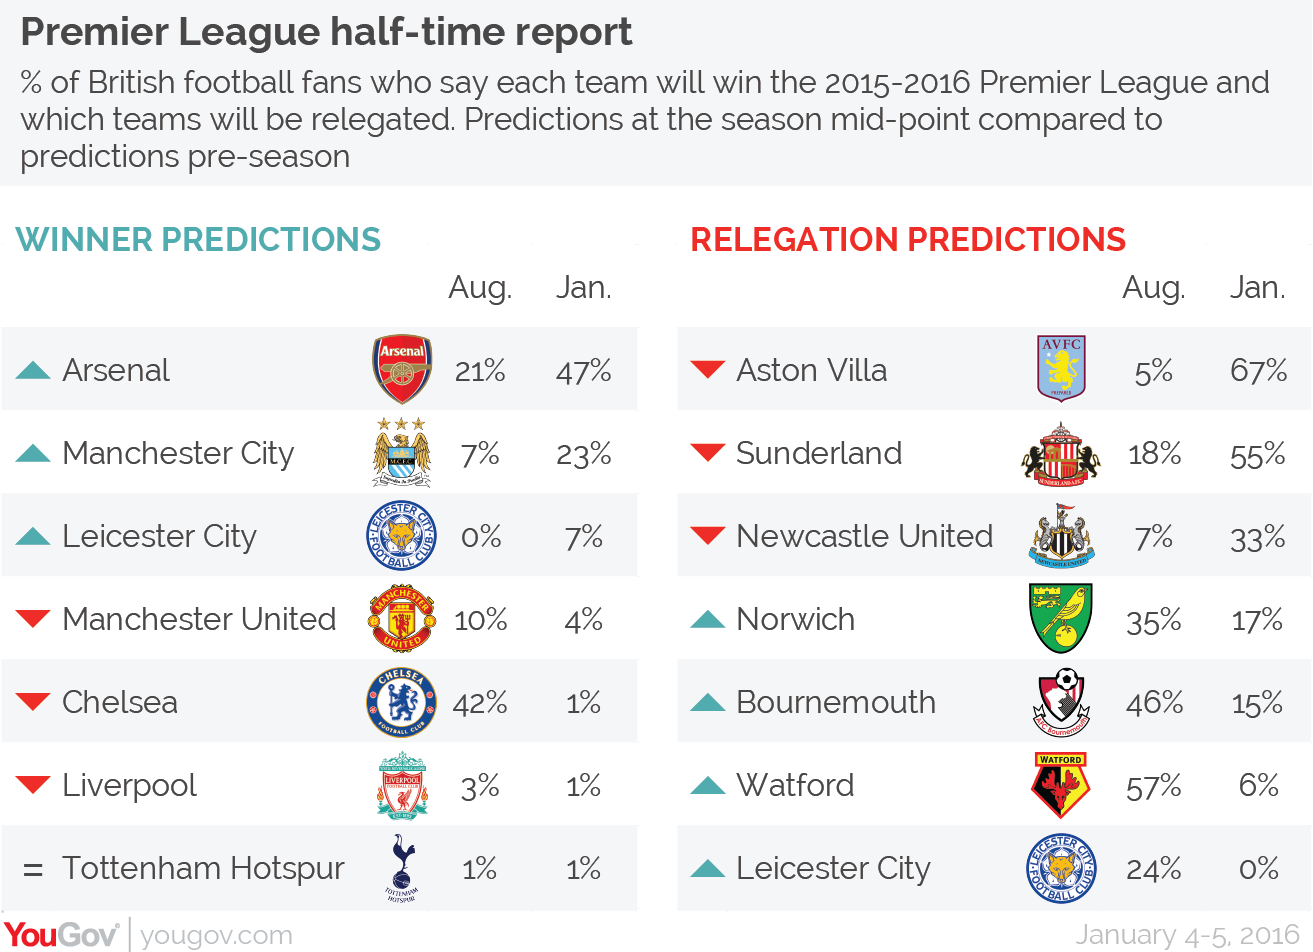 YouGov | Premier League mid-season predictions: Arsenal to win, Villa for relegation1313 x 952